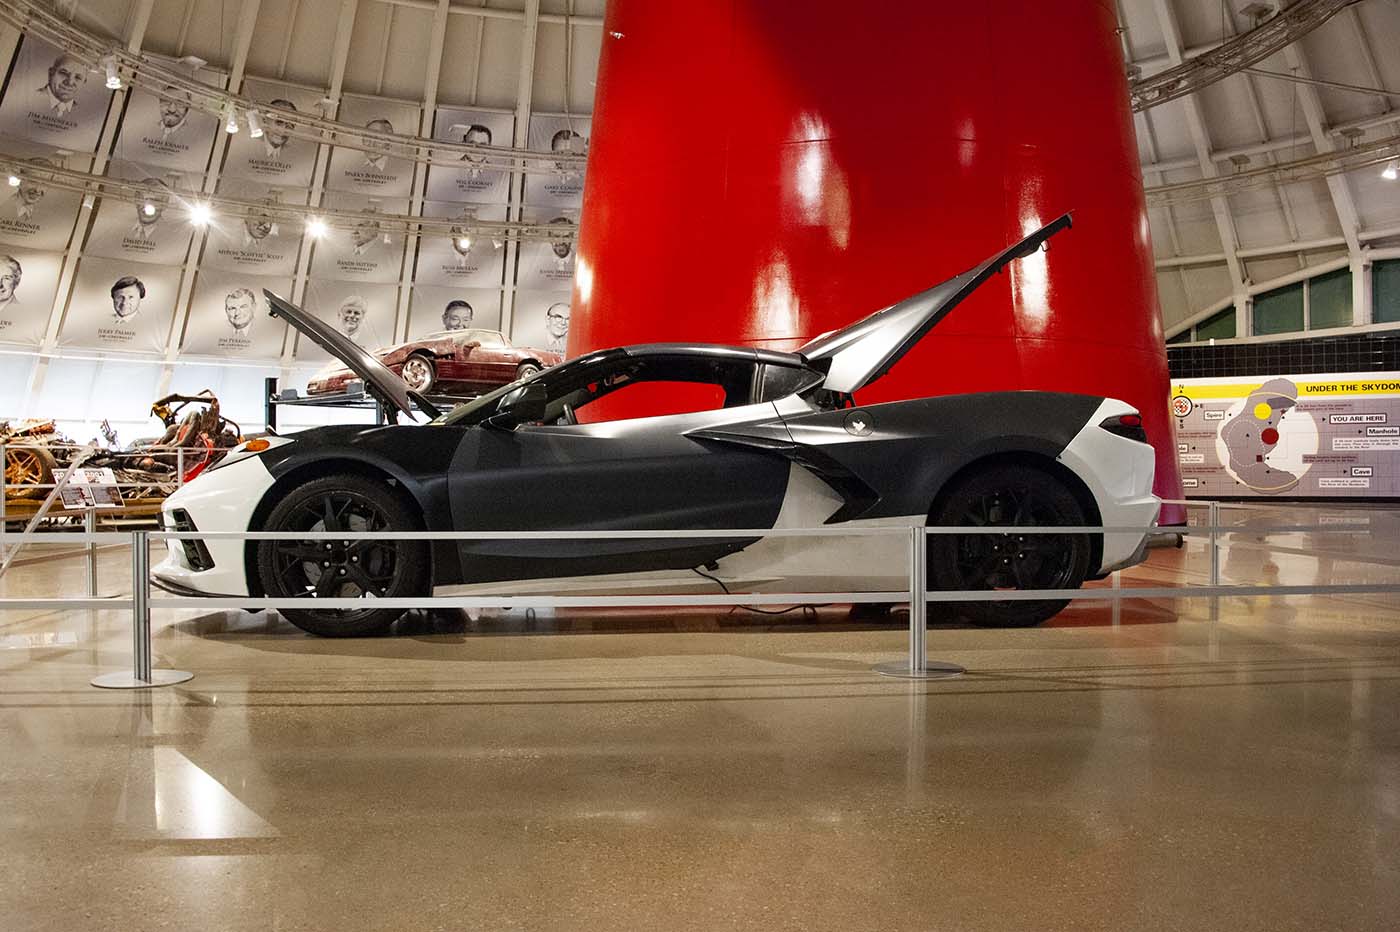 Museum Displays Next Generation Powertrain Development Corvette and Clay Model